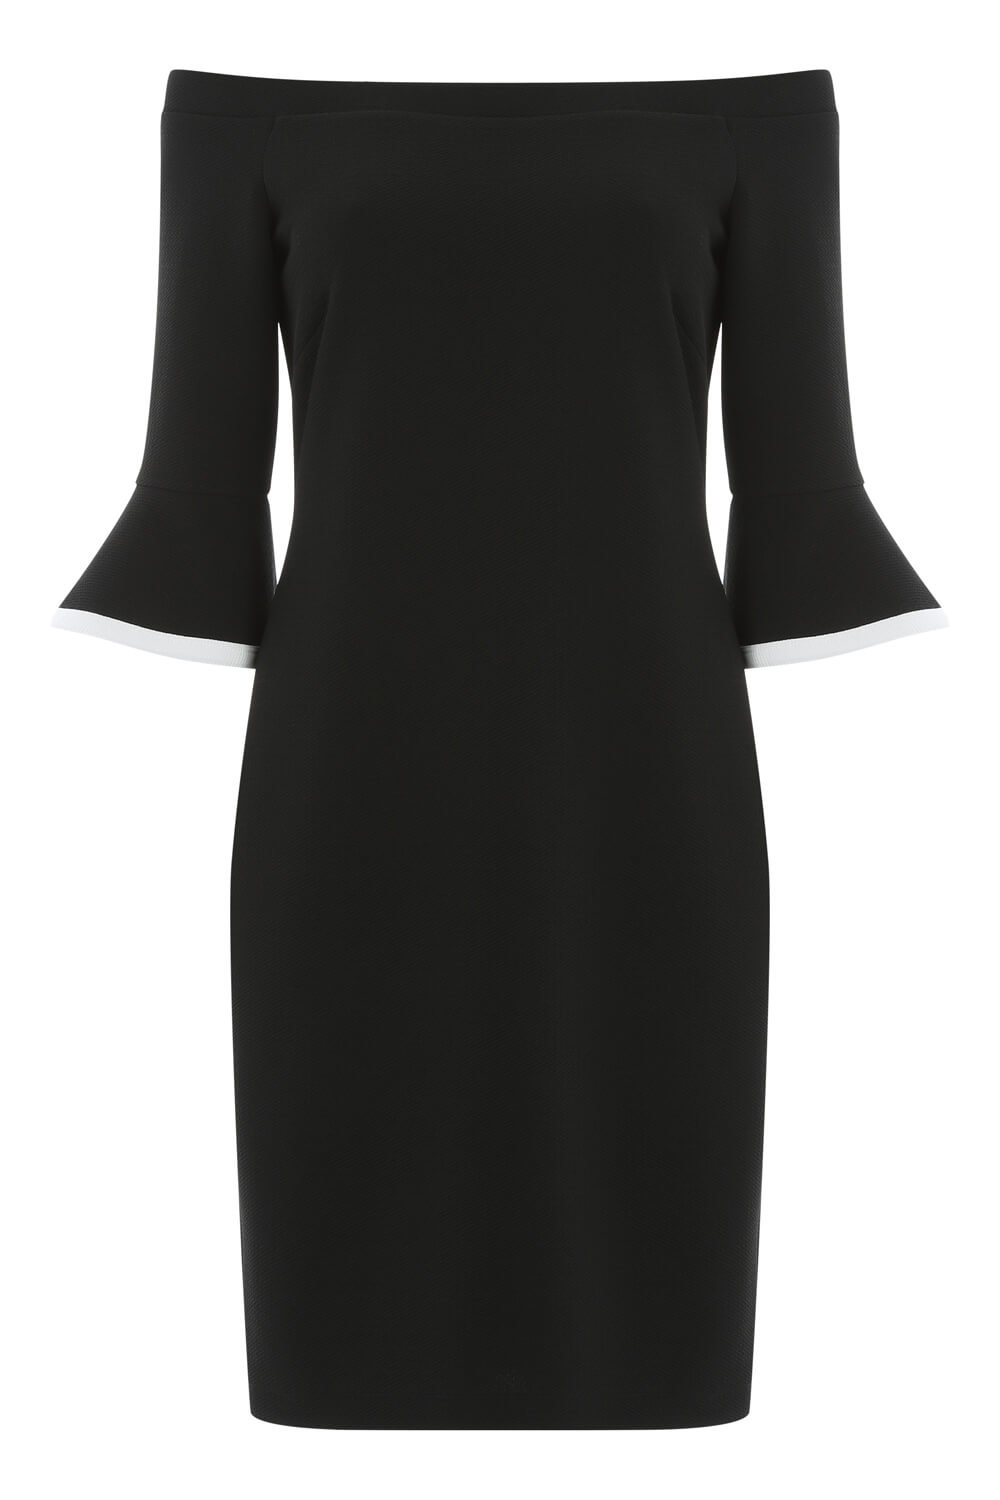 Black Bardot Contrast Trim Flute Sleeve Dress, Image 5 of 5